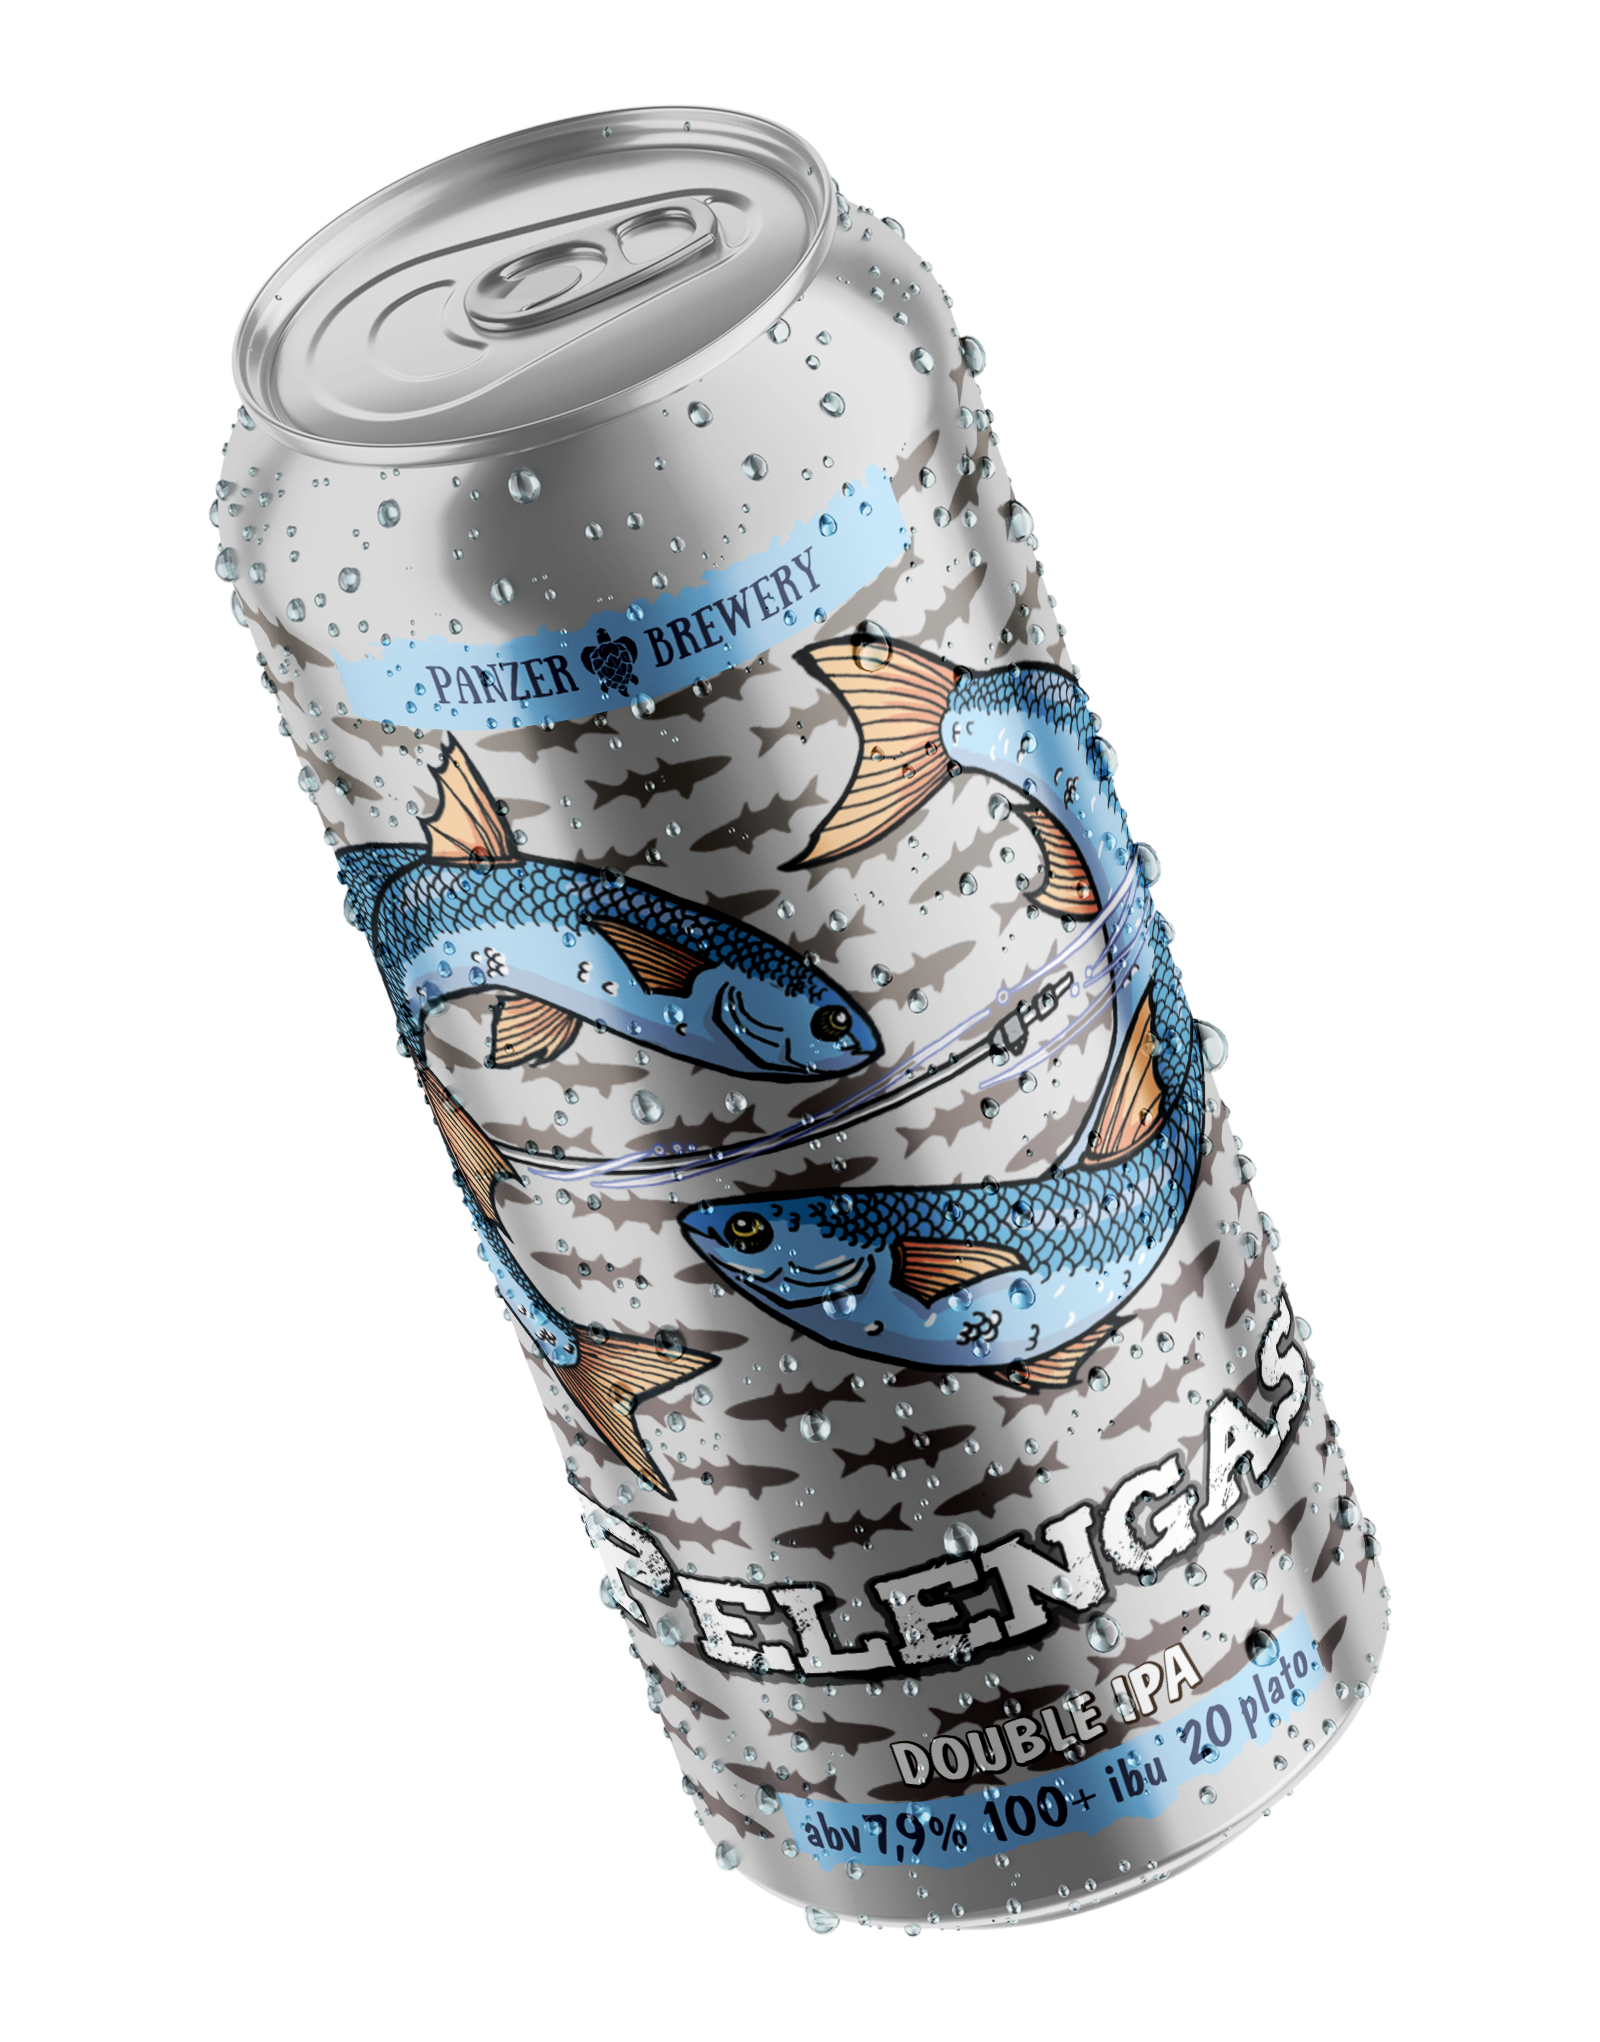 Банка пива Pelengas - Double IPA от Panzer Brewery